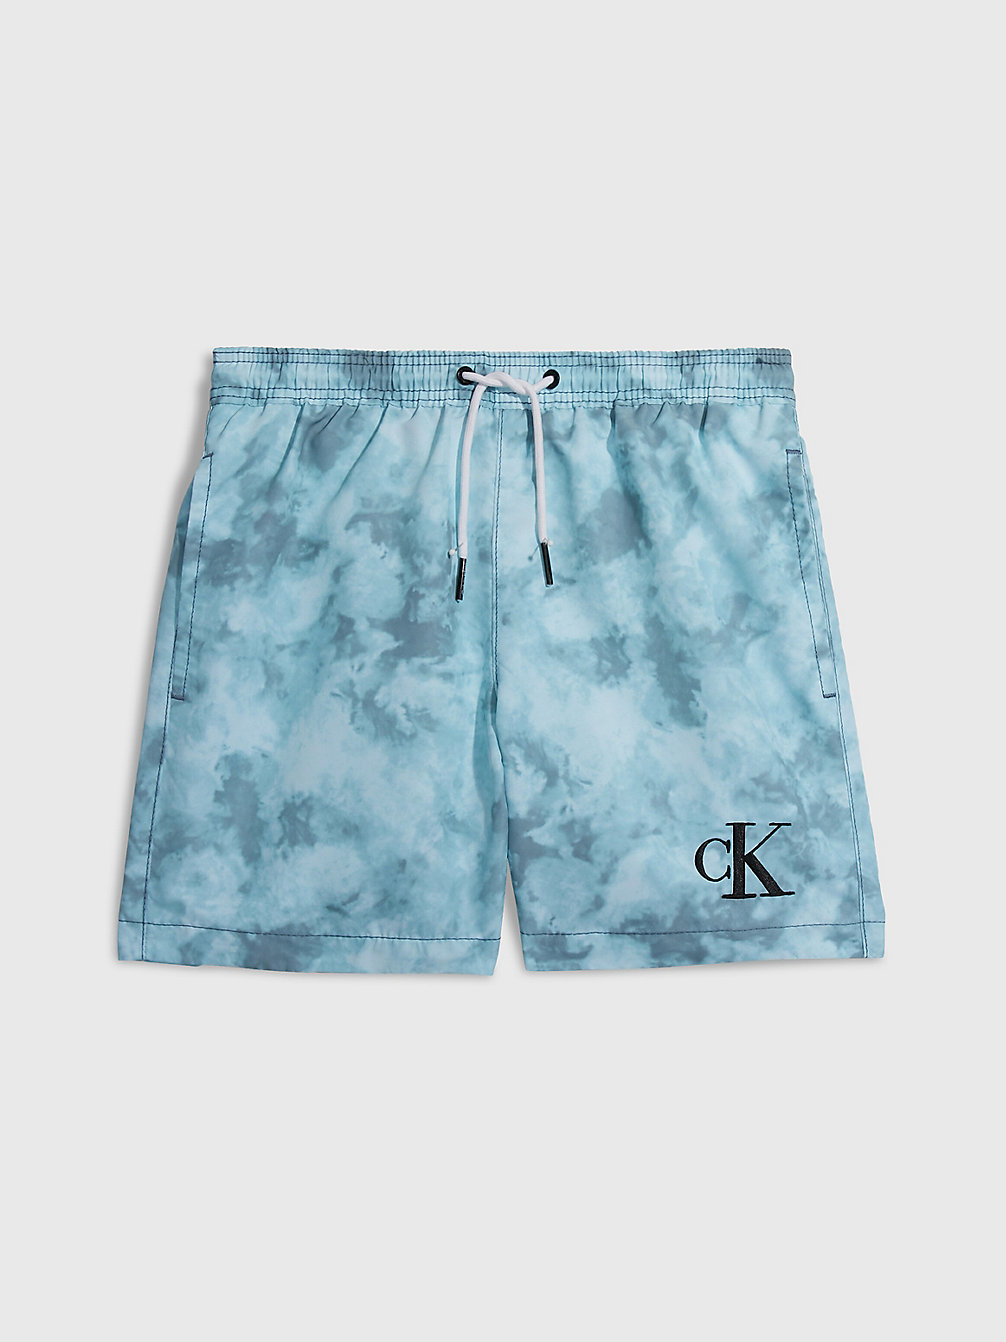 CK TIE DYE BLUE AOP Boys Swim Shorts - Authentic undefined boys Calvin Klein